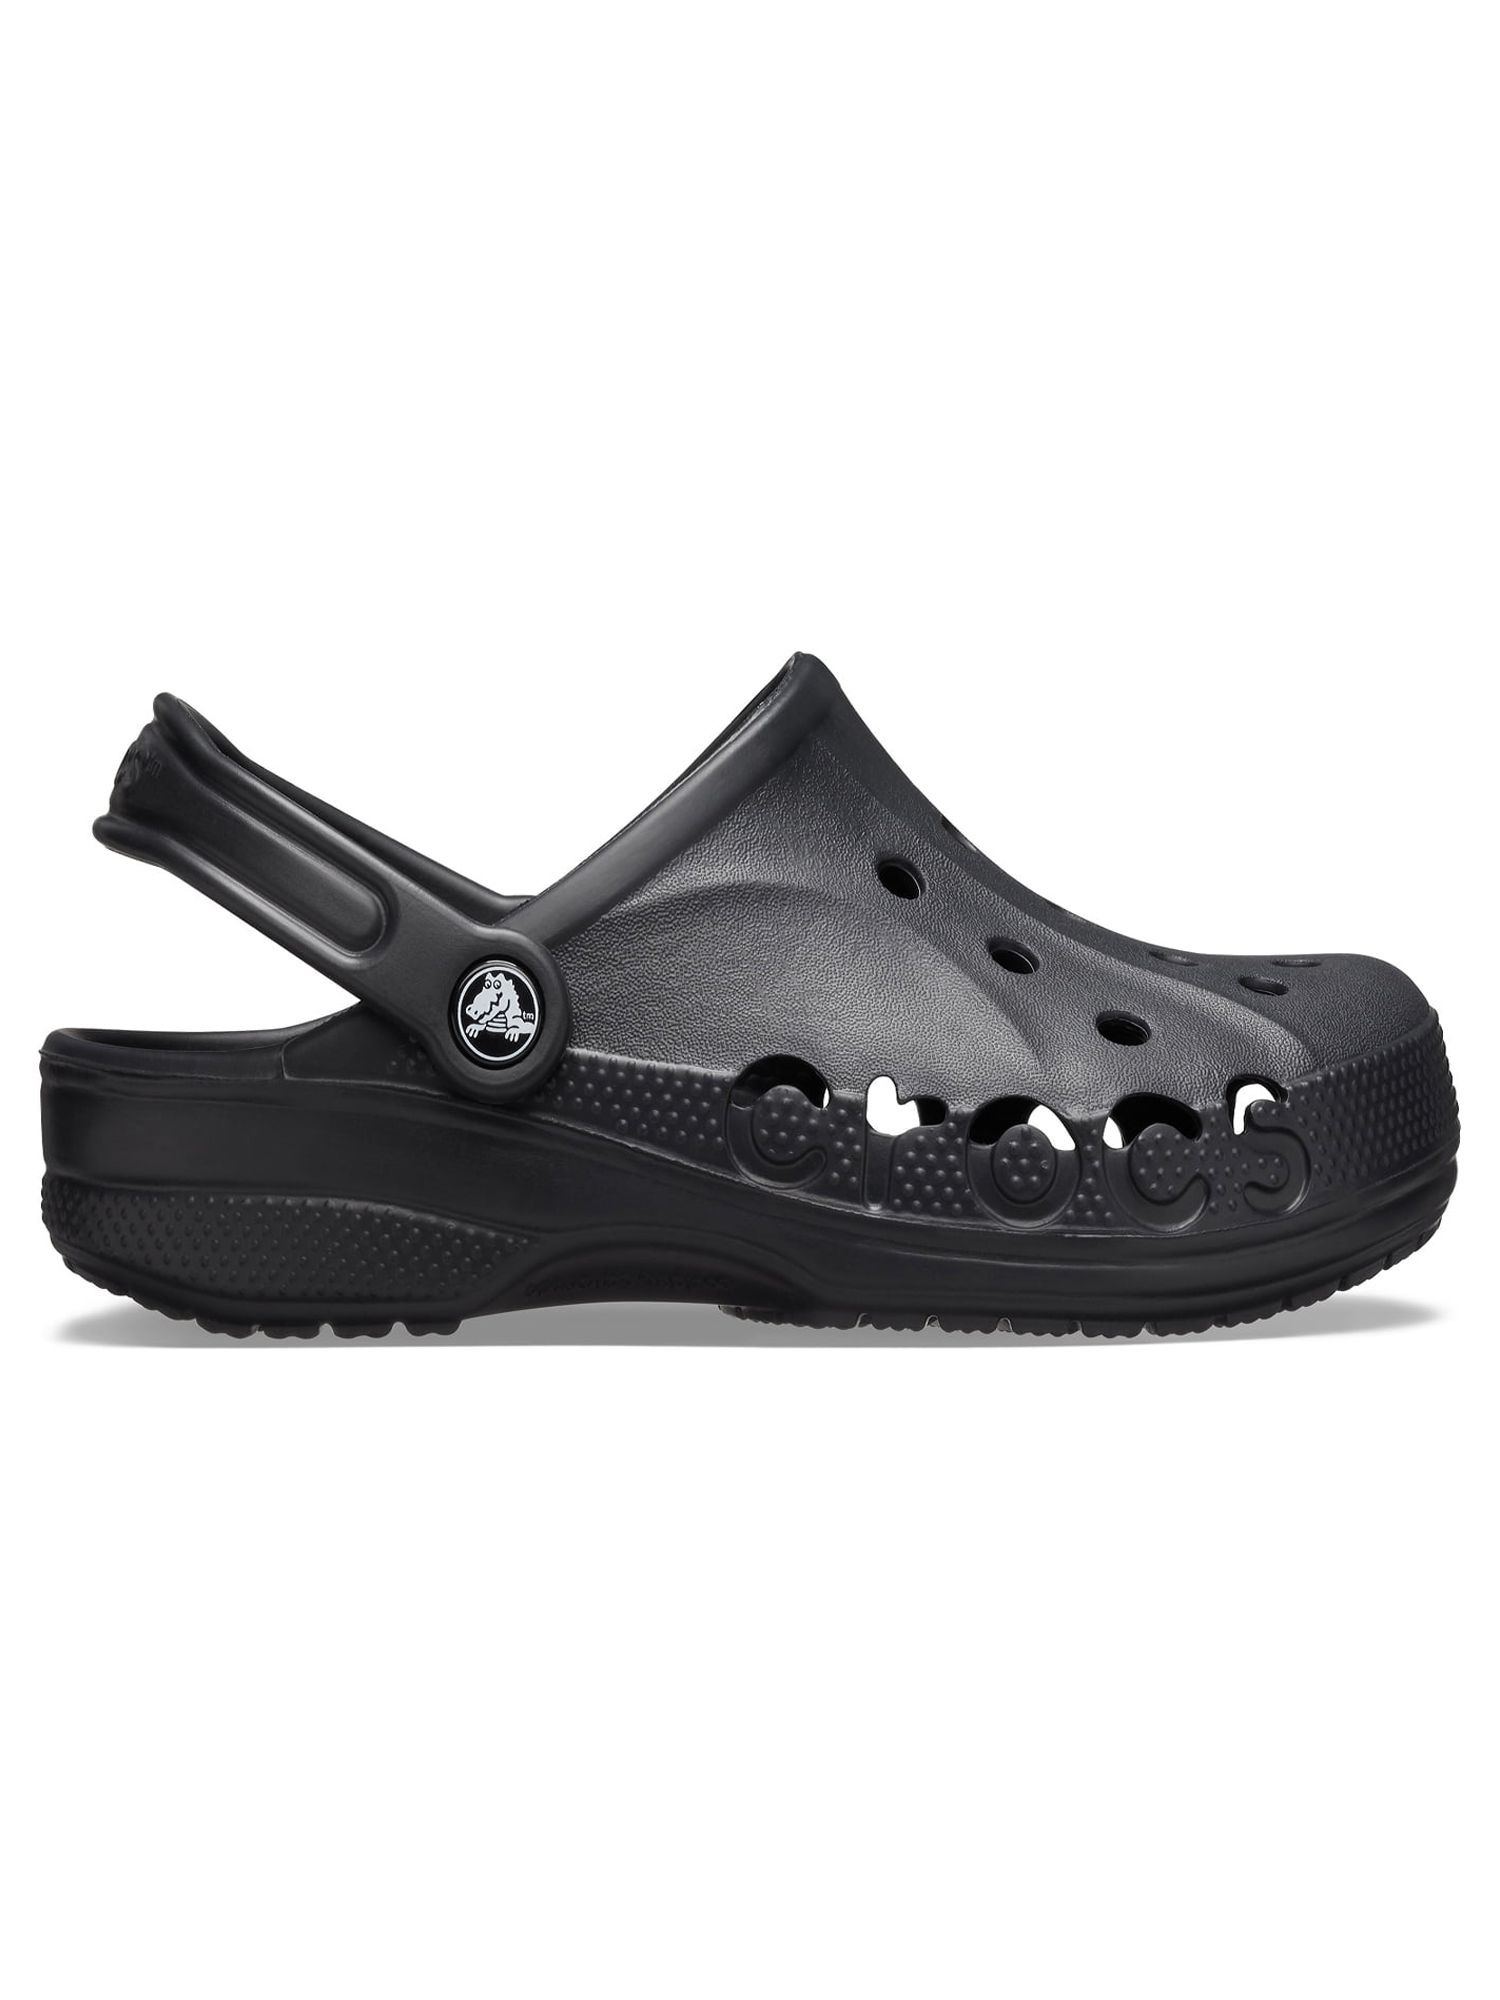 Crocs Men's and Women's Unisex Baya Clog Sandals - image 1 of 5